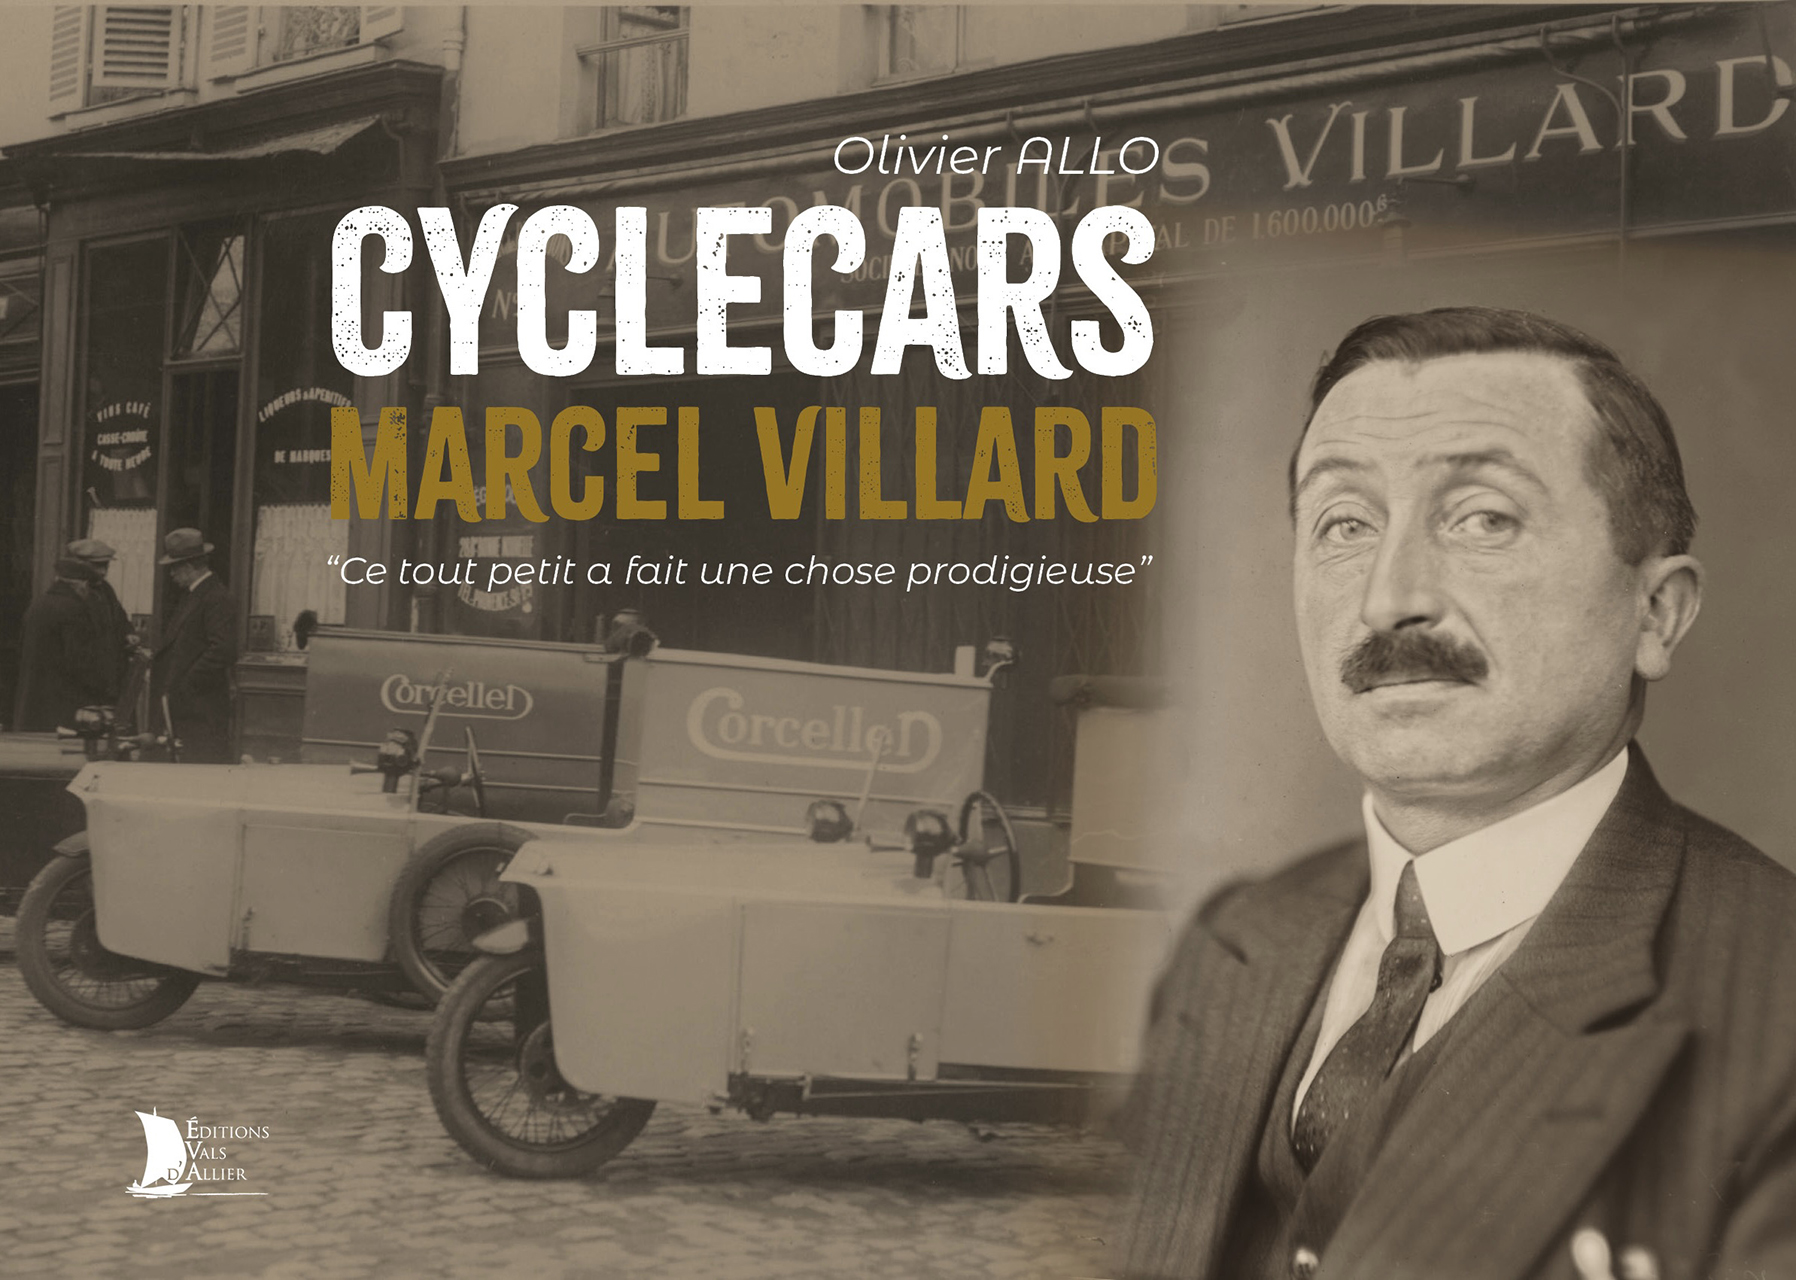 Cyclecars marcel villars